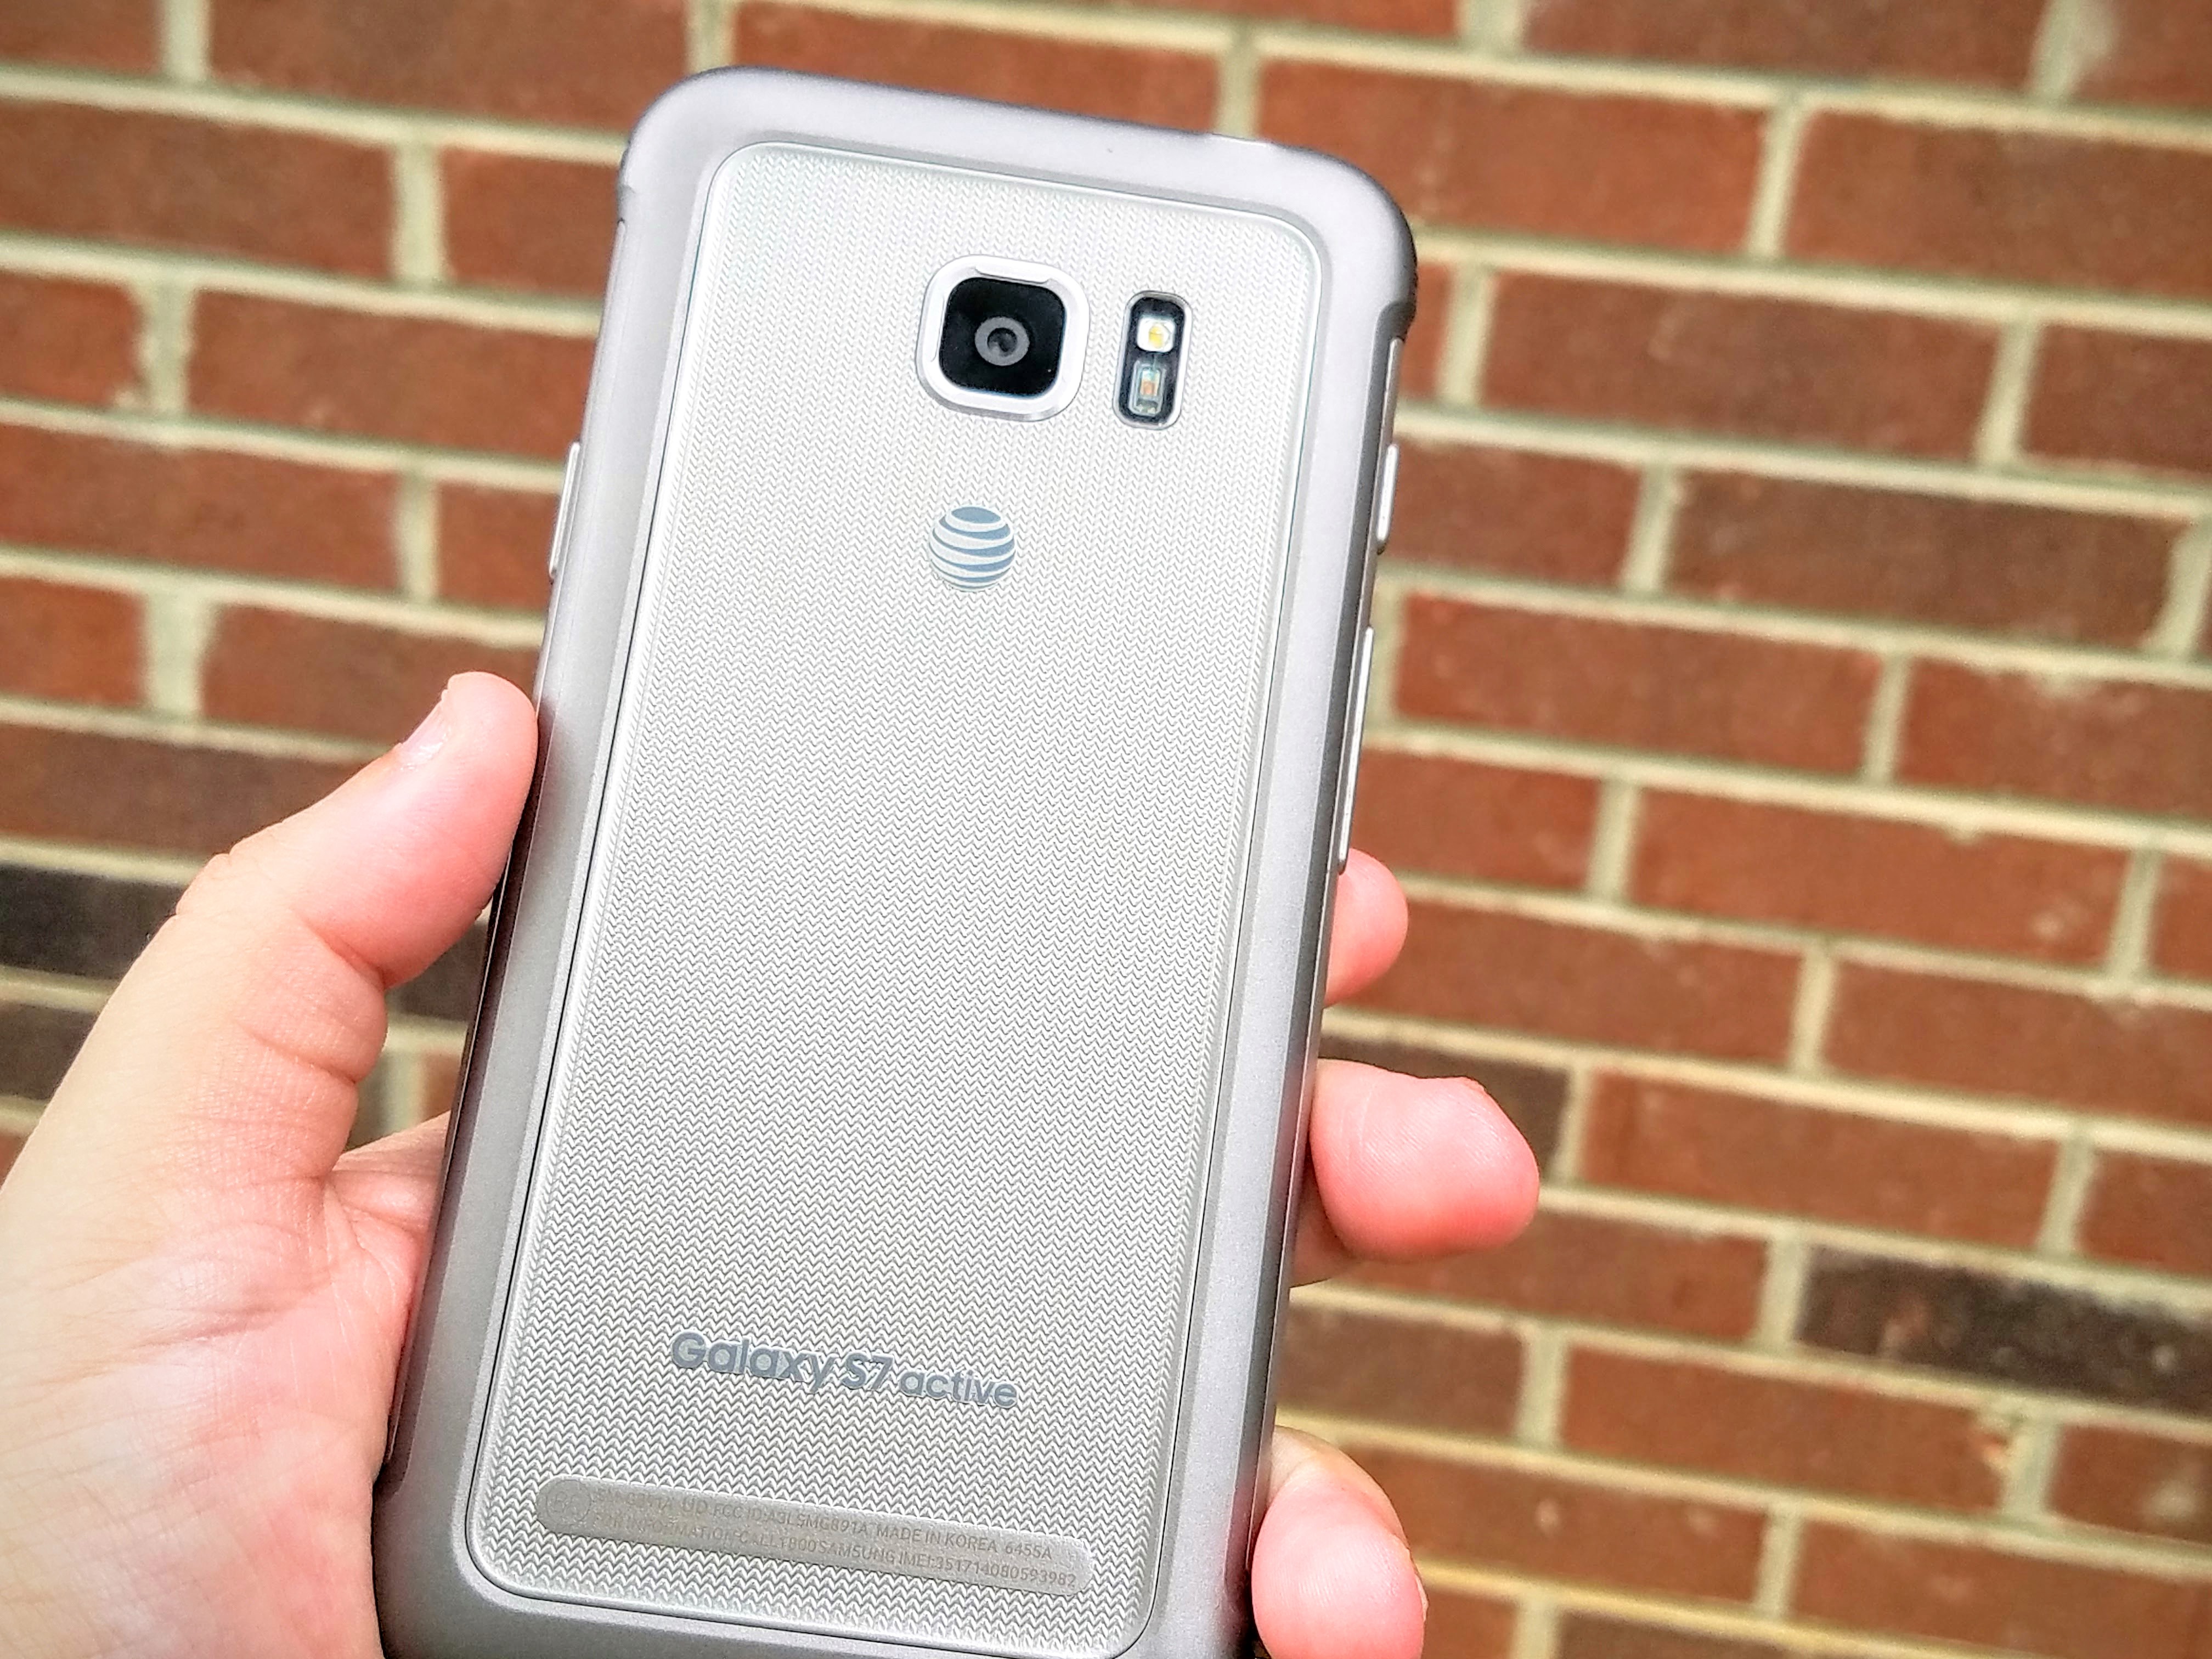 Kiezelsteen Verlating bestrating Samsung Galaxy S7 Active - SamMobile